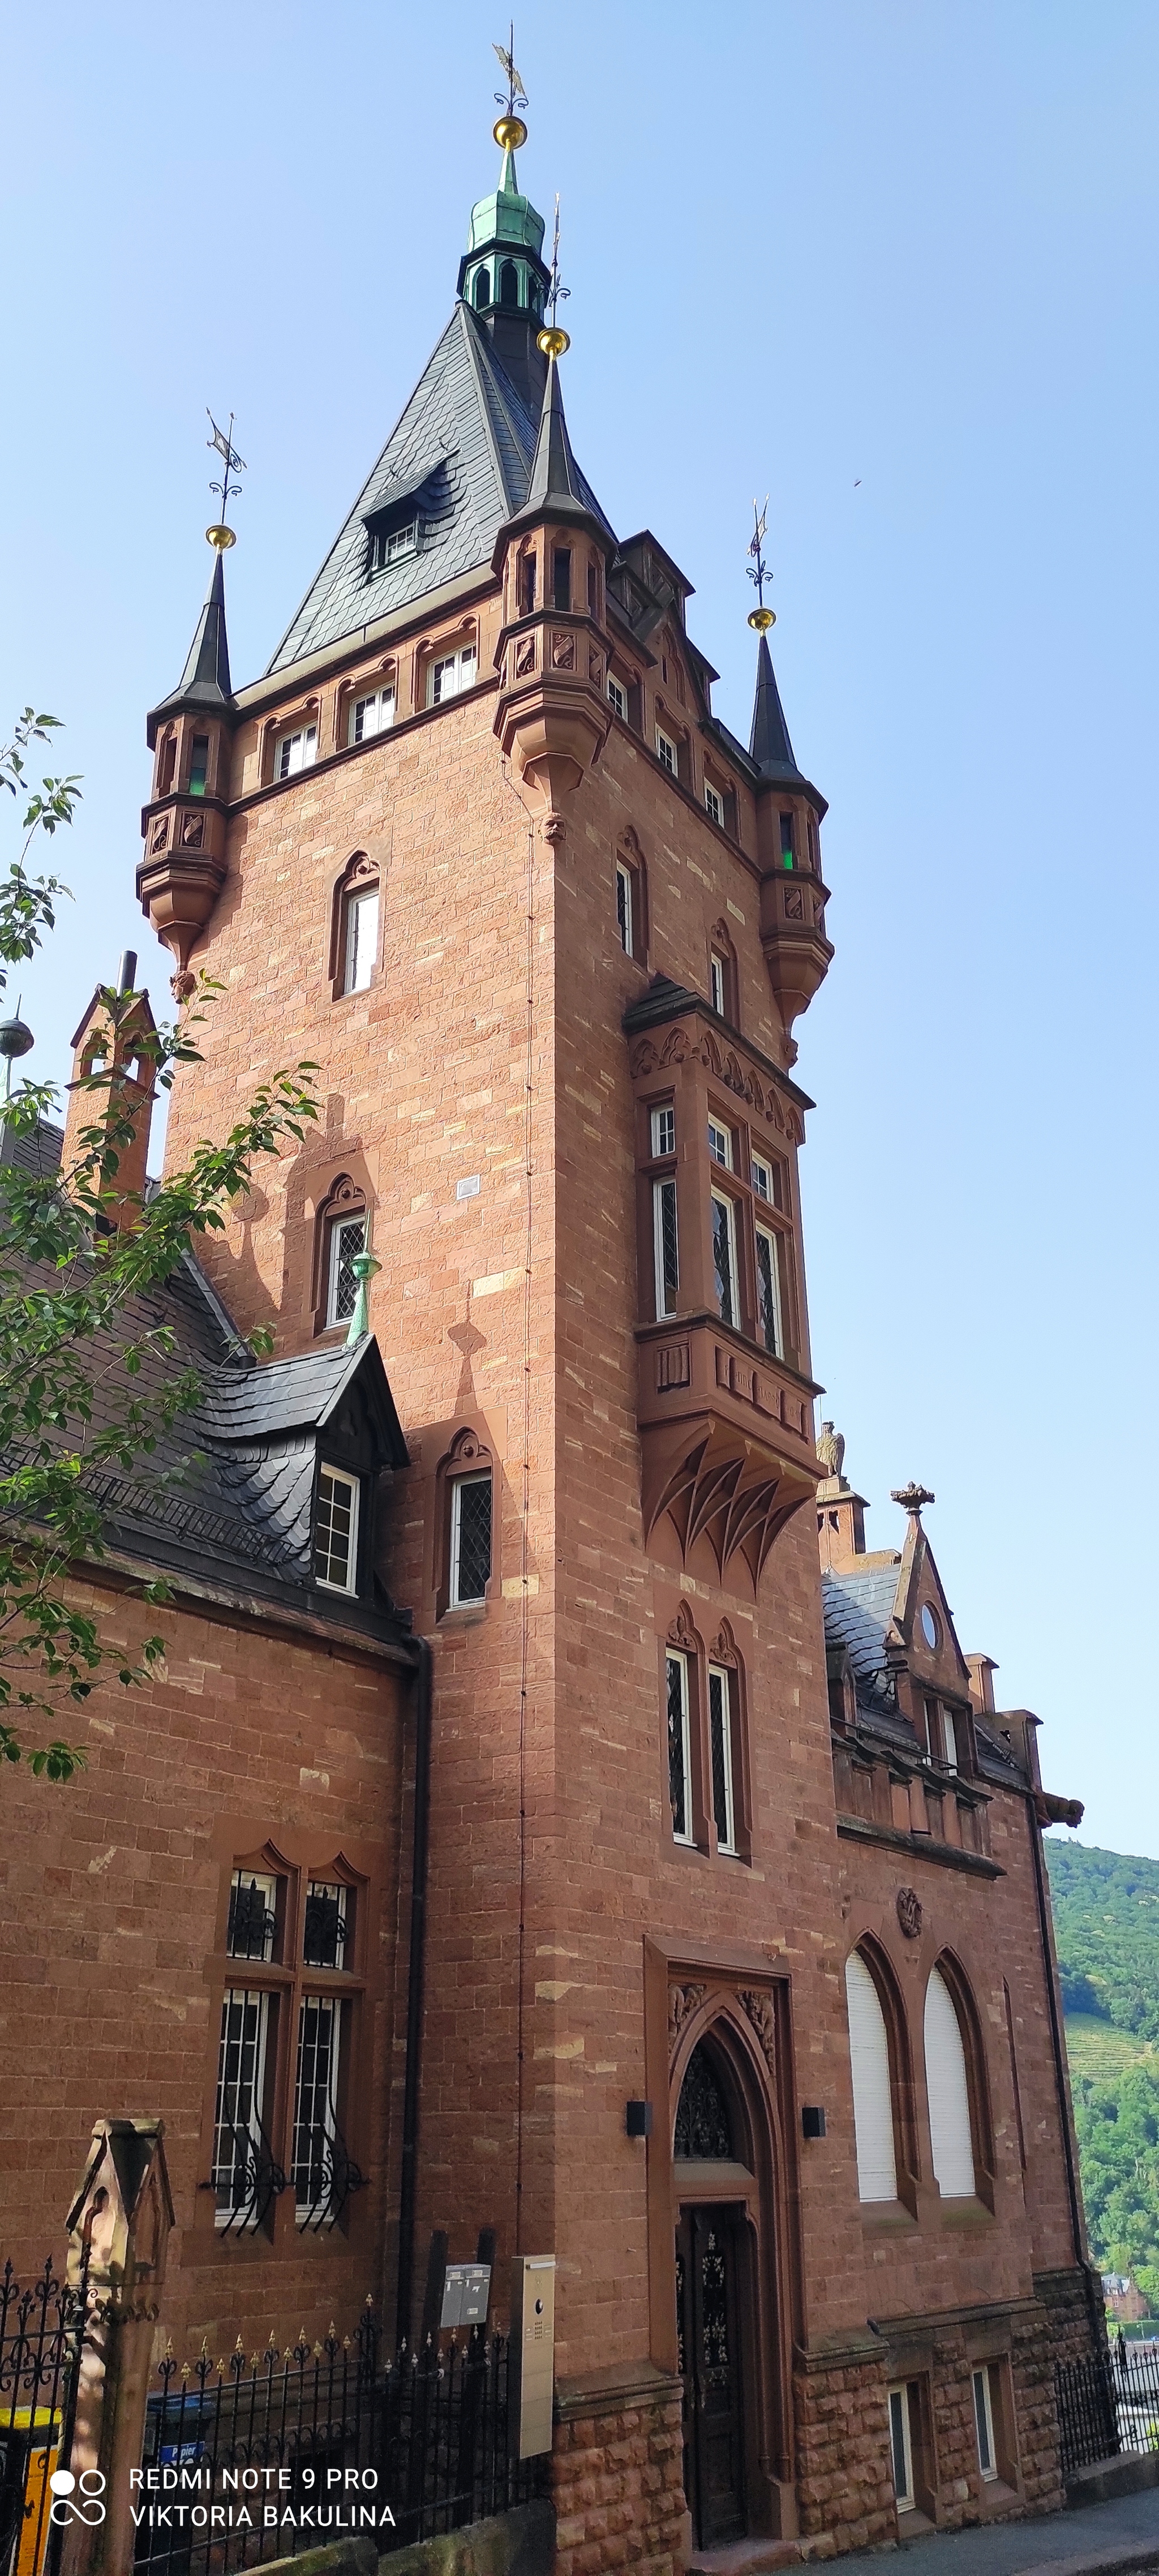 Handsome Heidelberg - My, Germany, , Motorcycle travel, Longpost, The photo